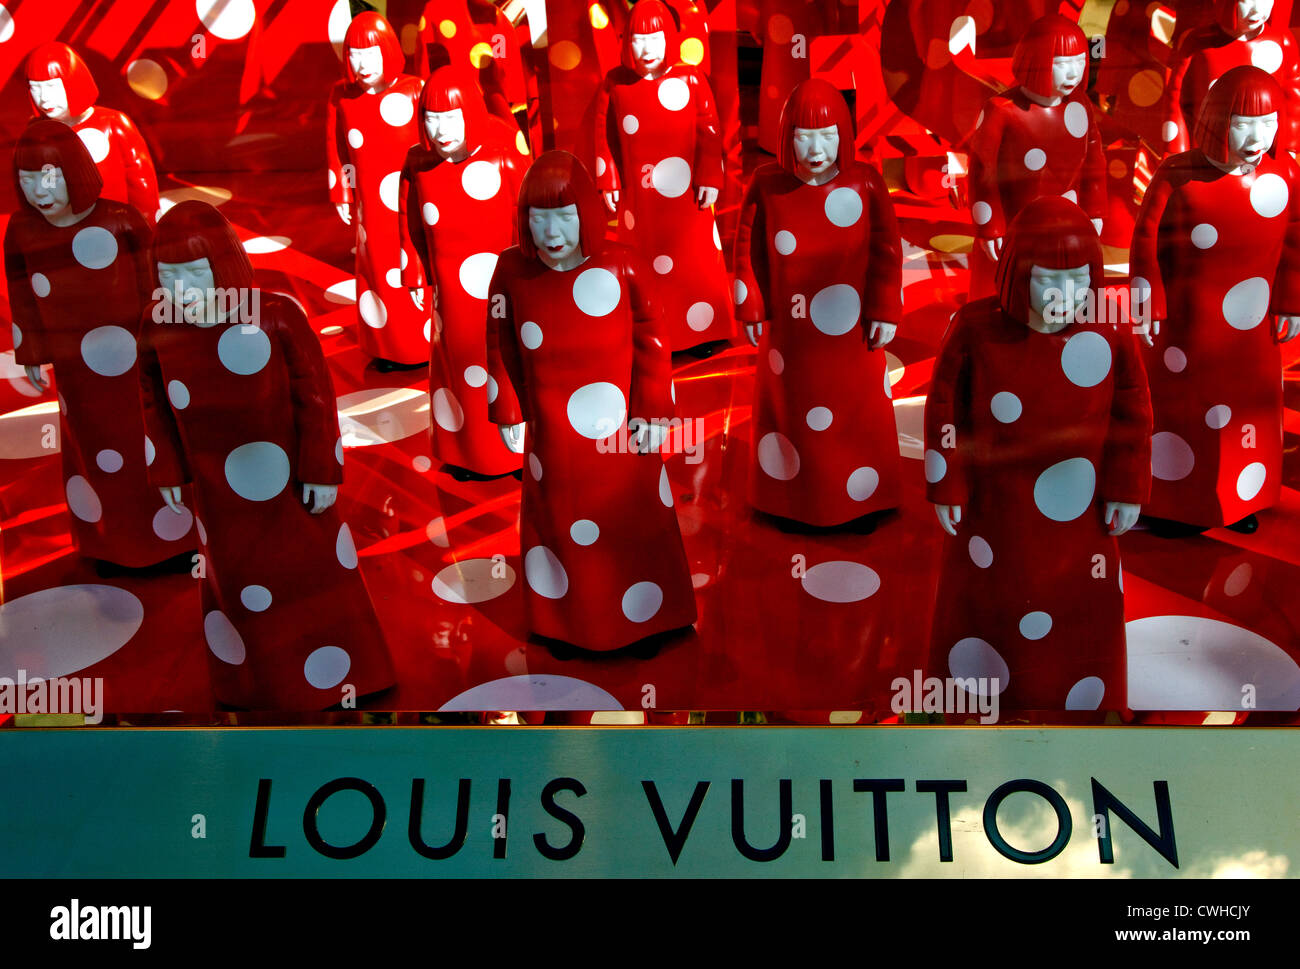 Yayoi Kusama window display for Louis Vuitton in Selfridges